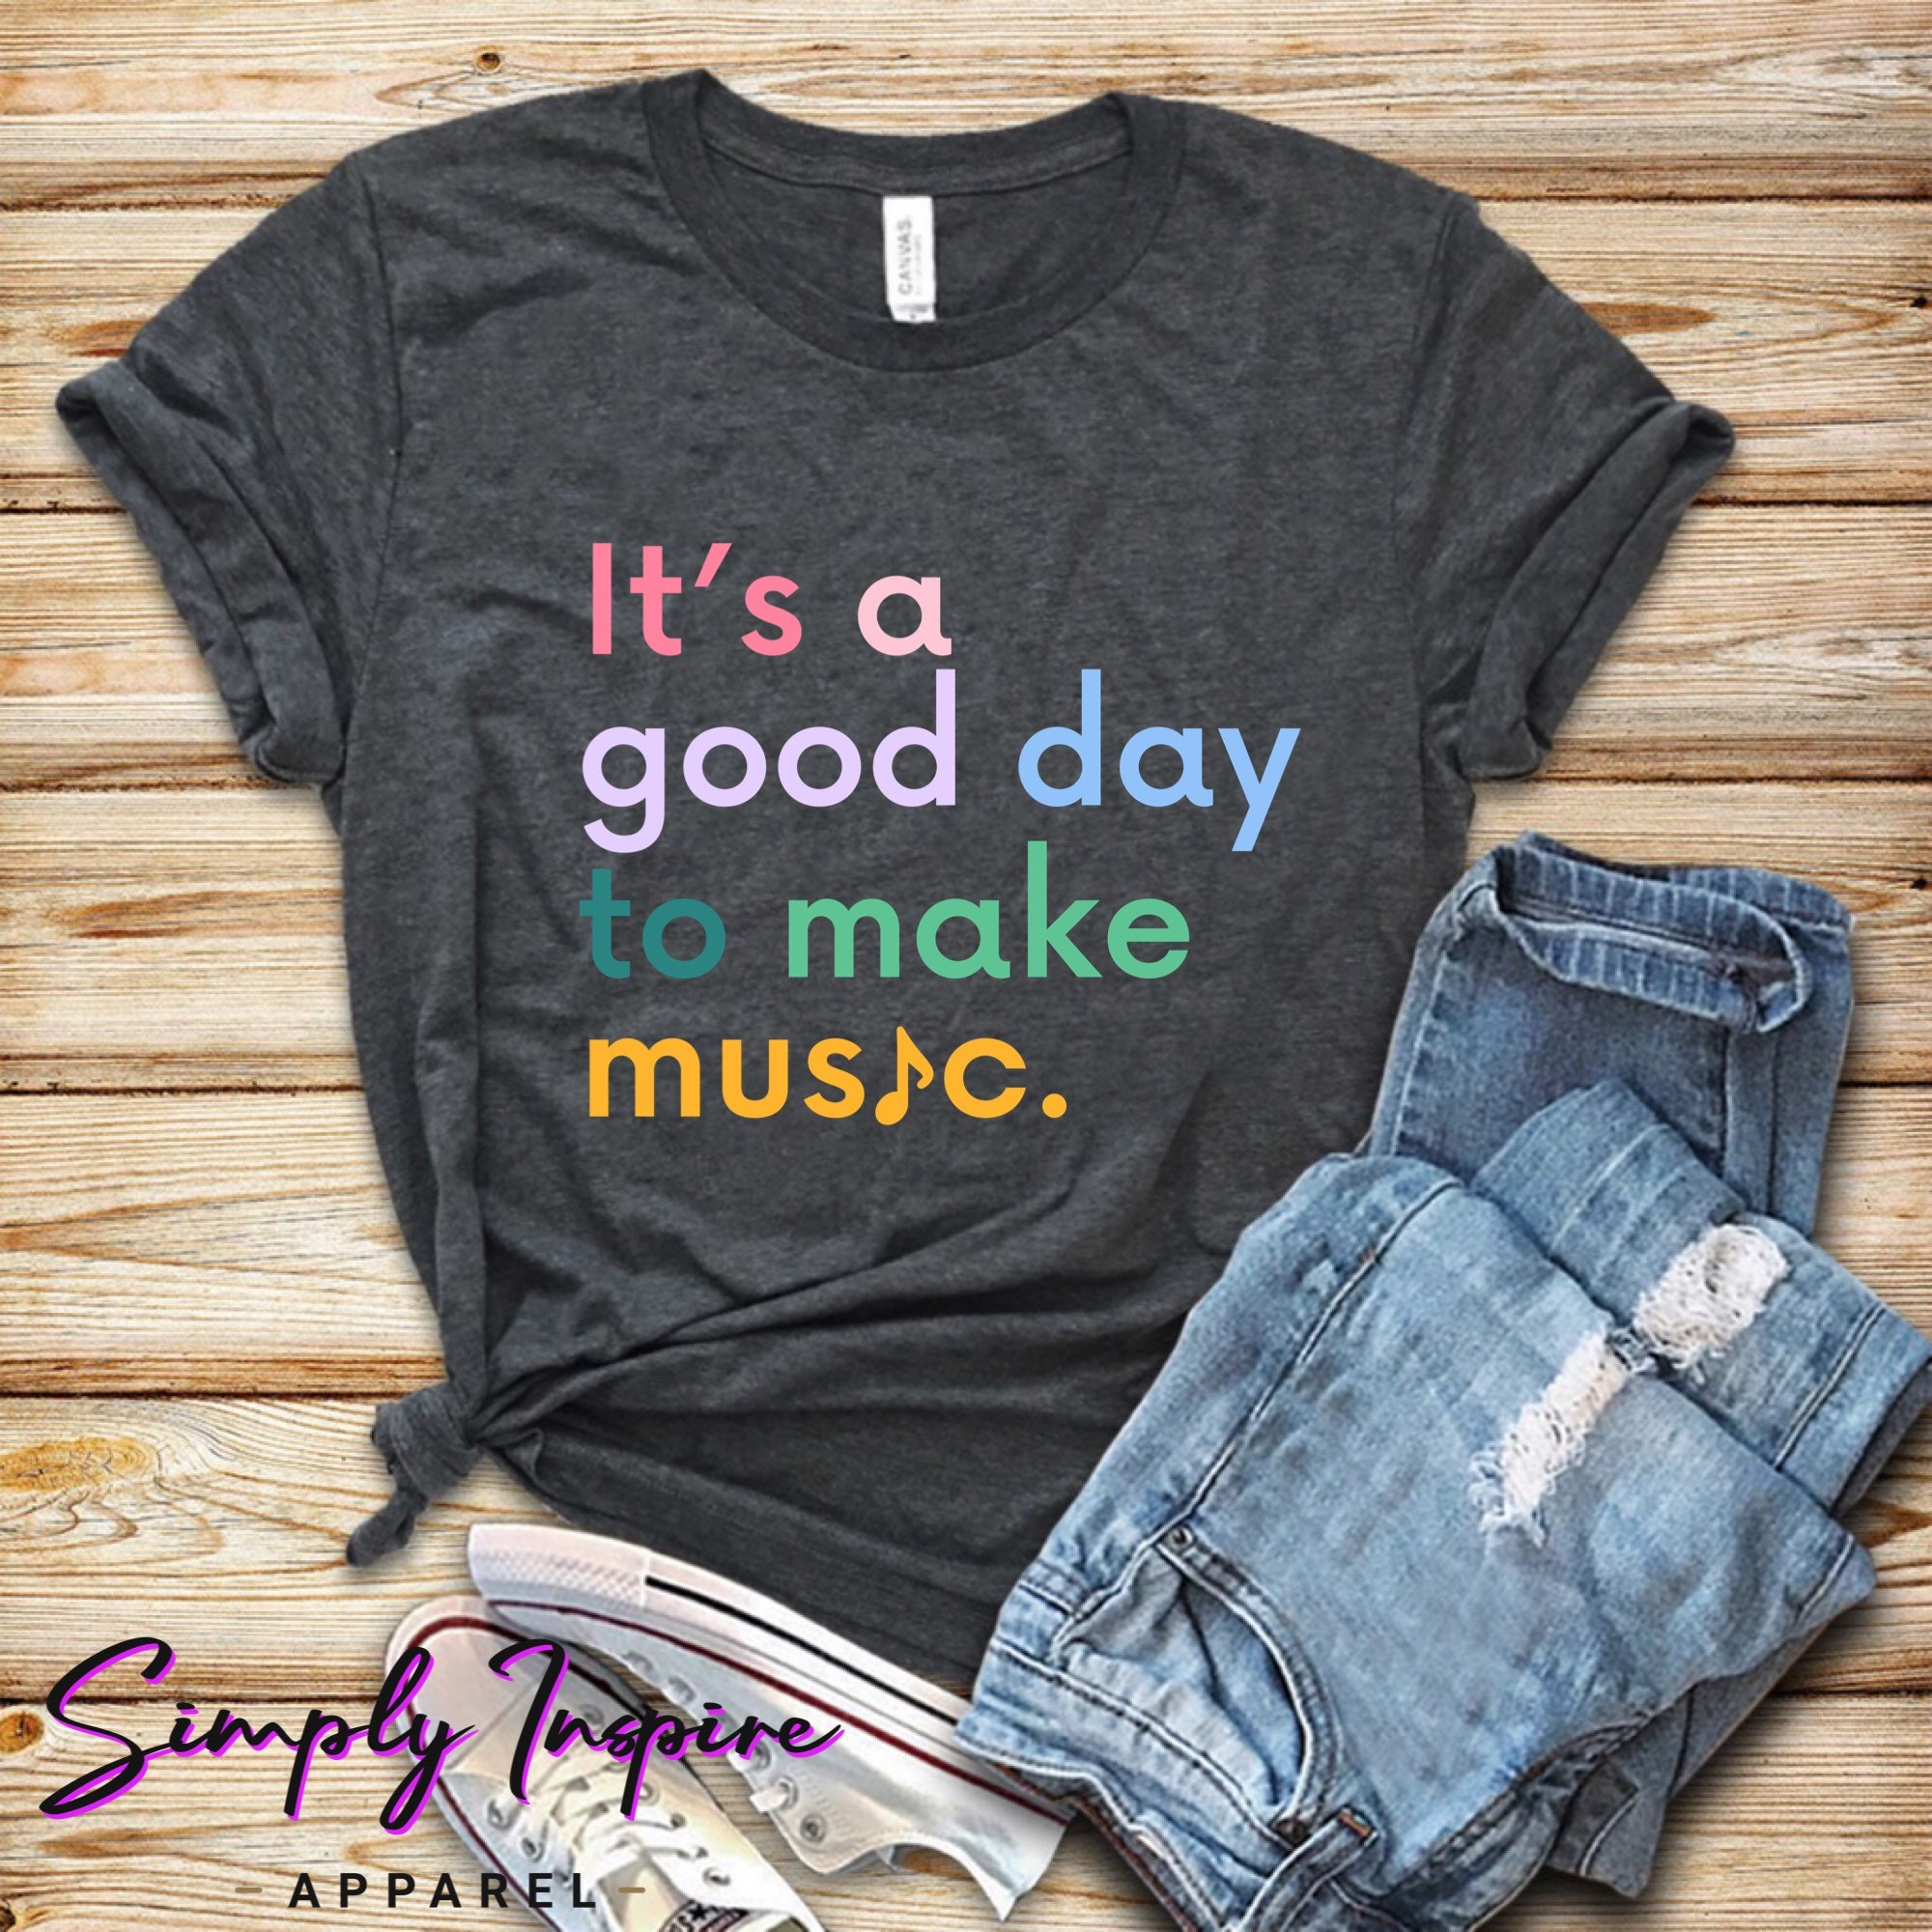 Comfy Shirt with Inspirational Design for Musicians